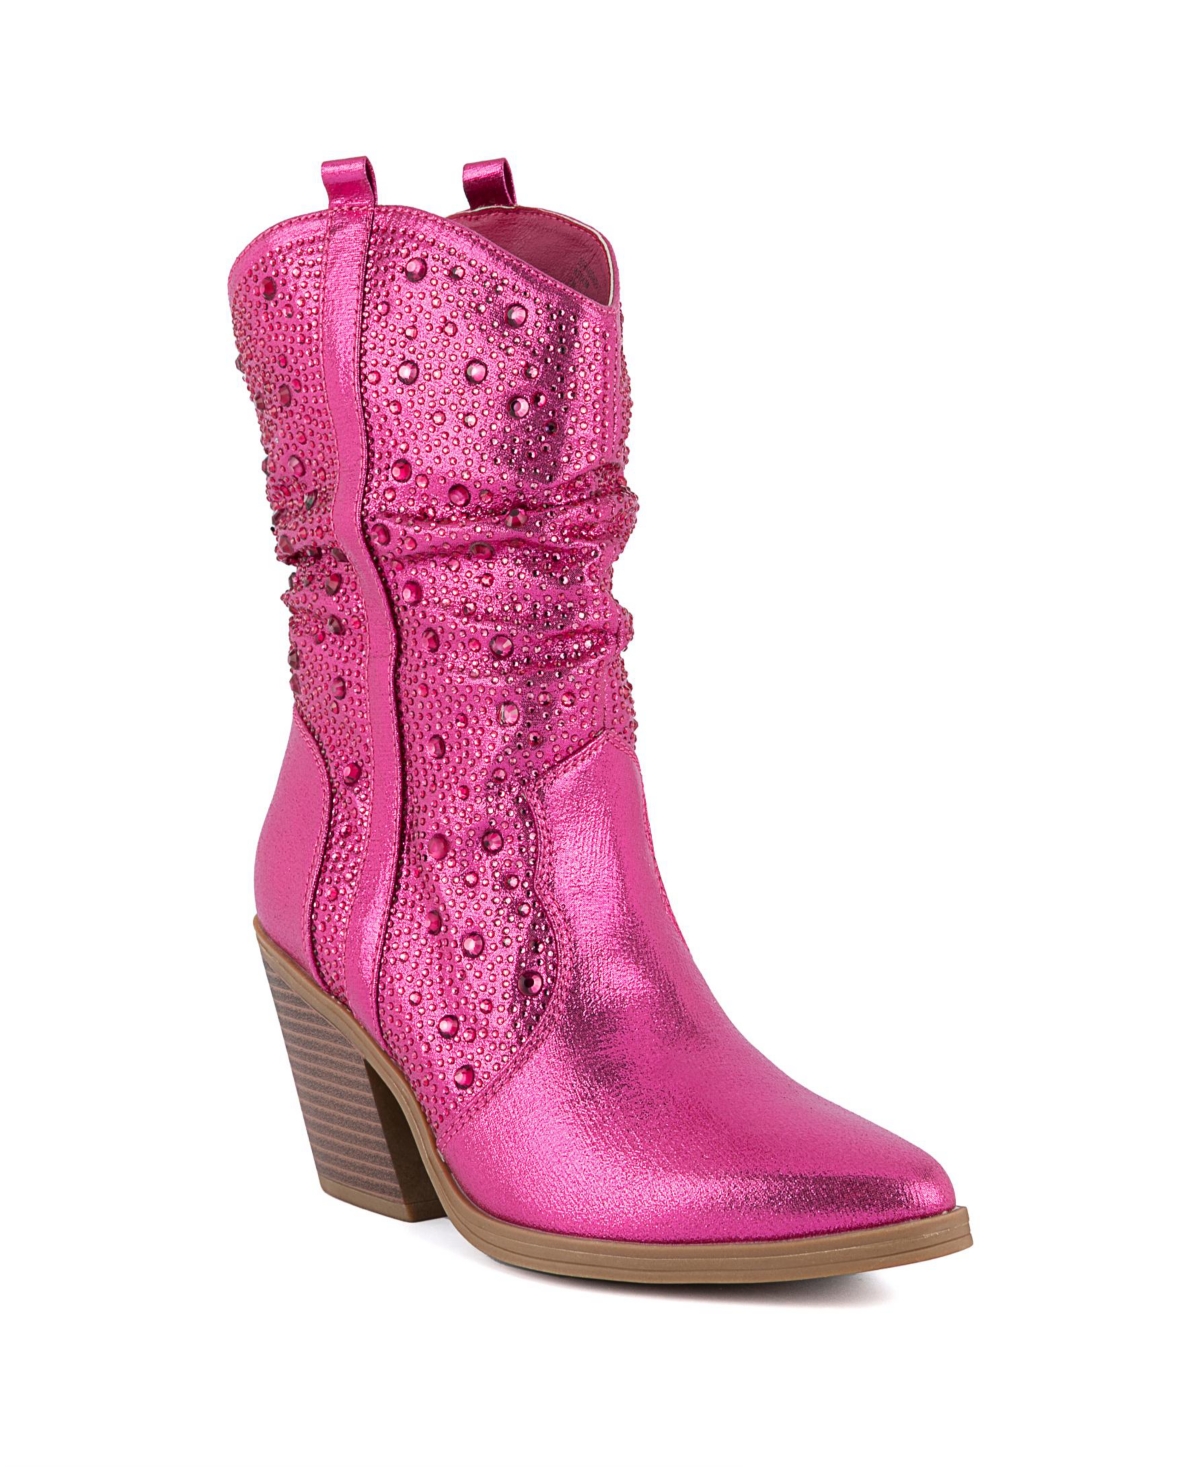 Women's Kassandra 2 Narrow Calf Embellished Western Boots - Pink